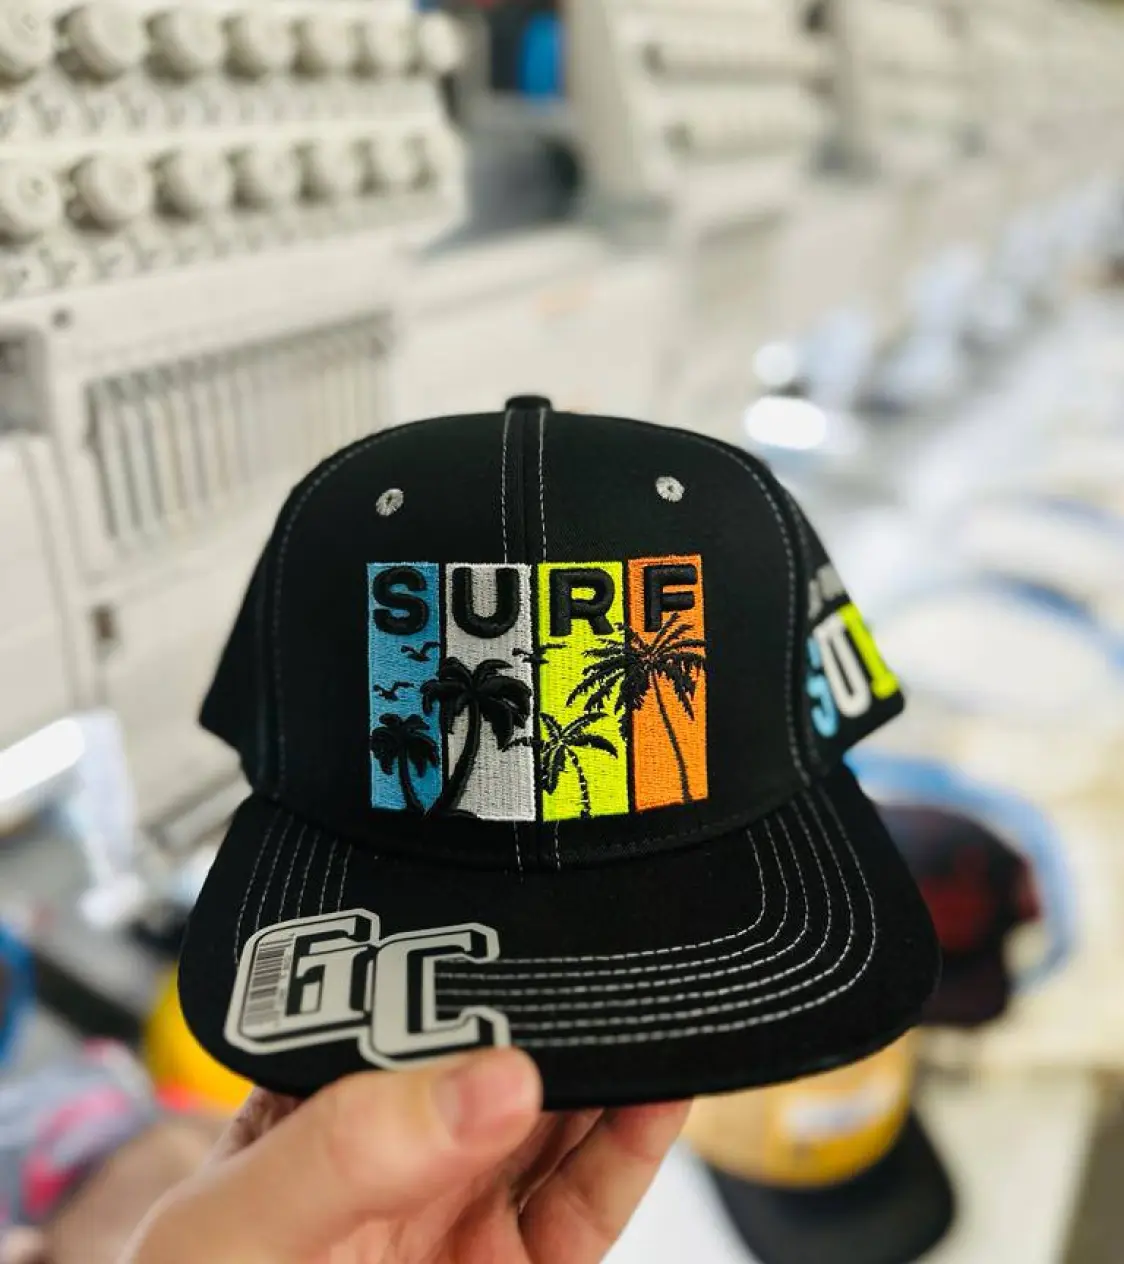 Black cap with surf print